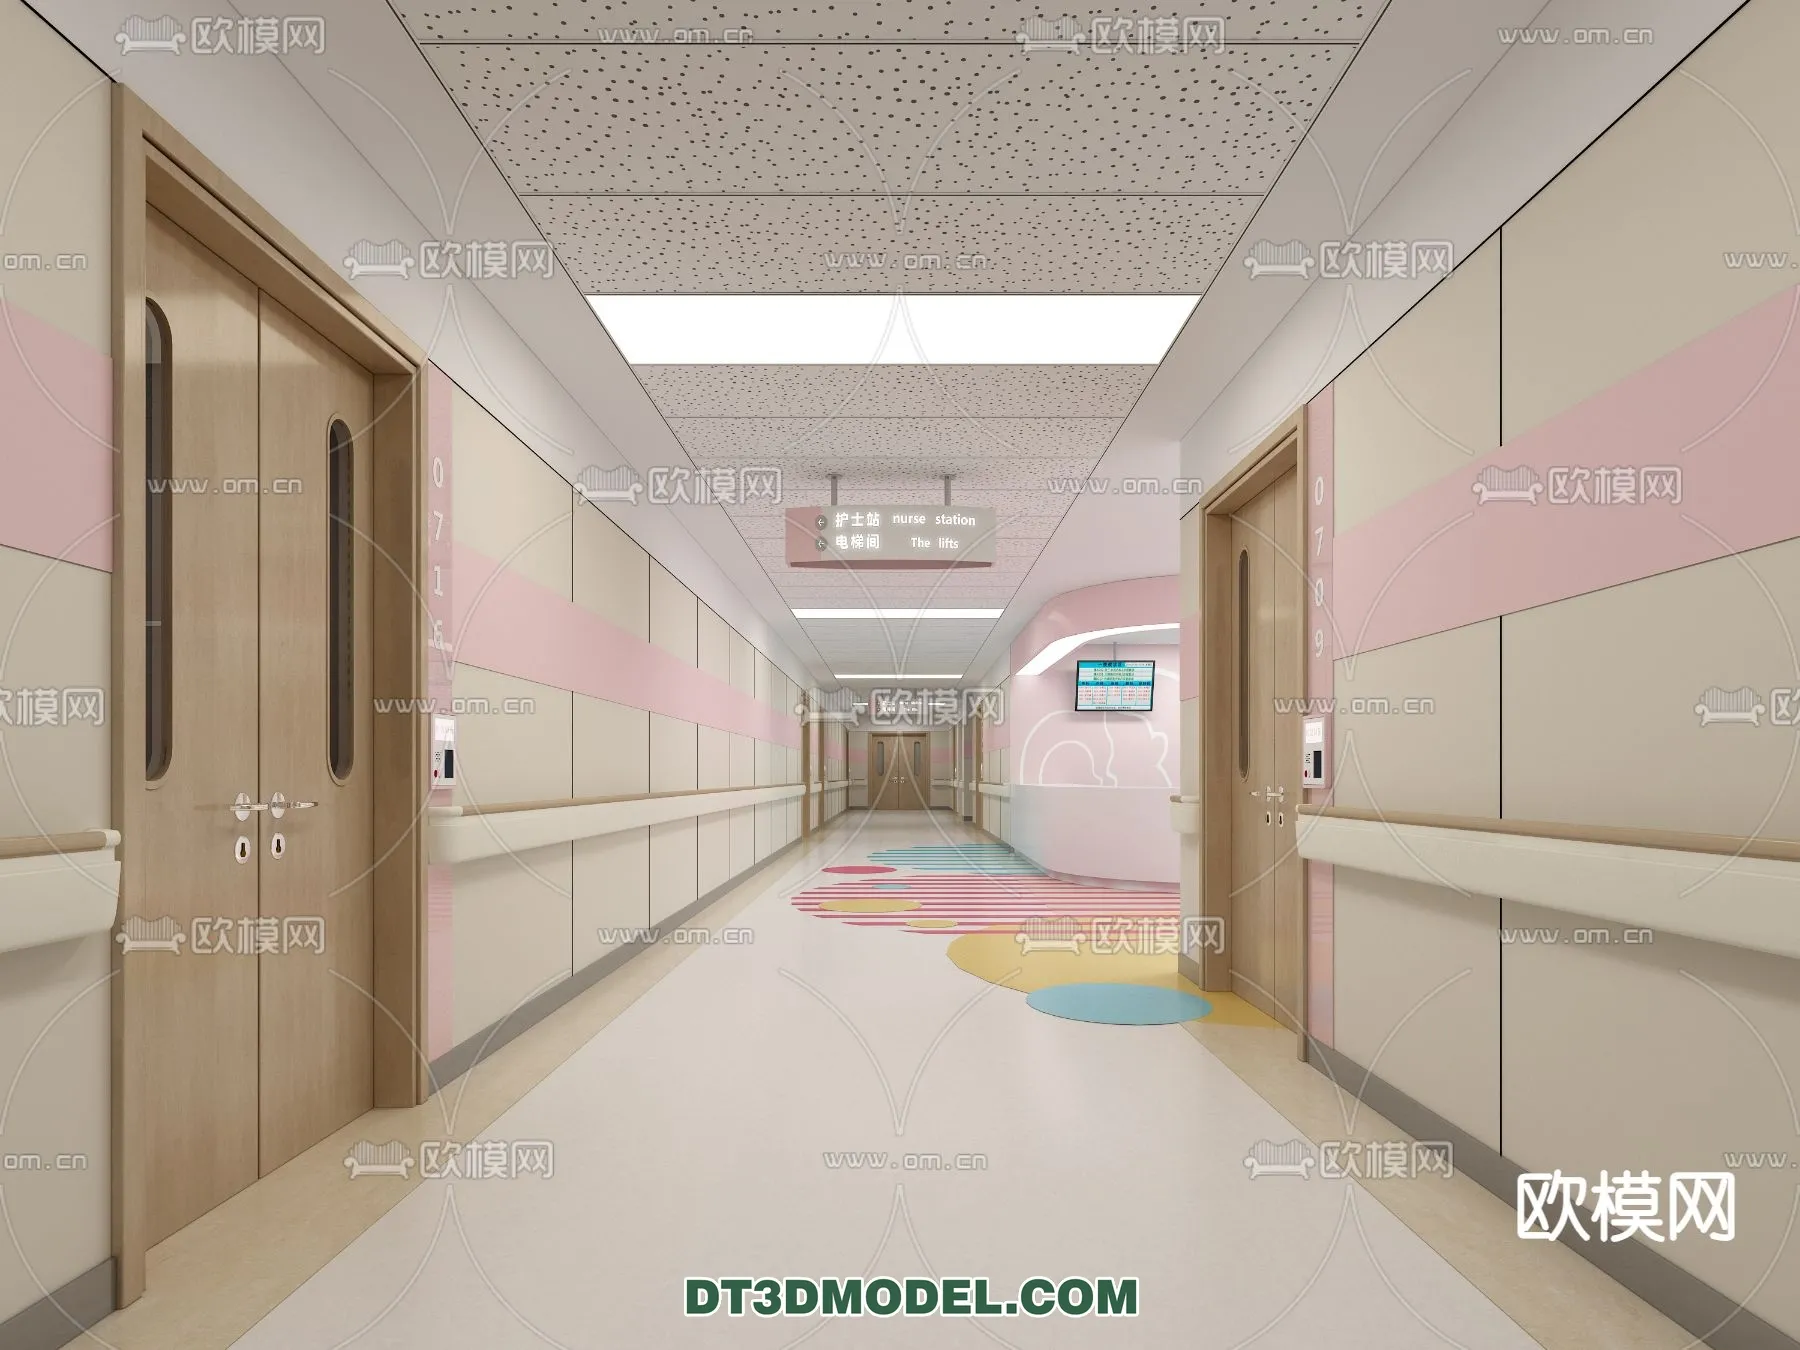 HOSPITAL 3D SCENES – MODERN – 0154